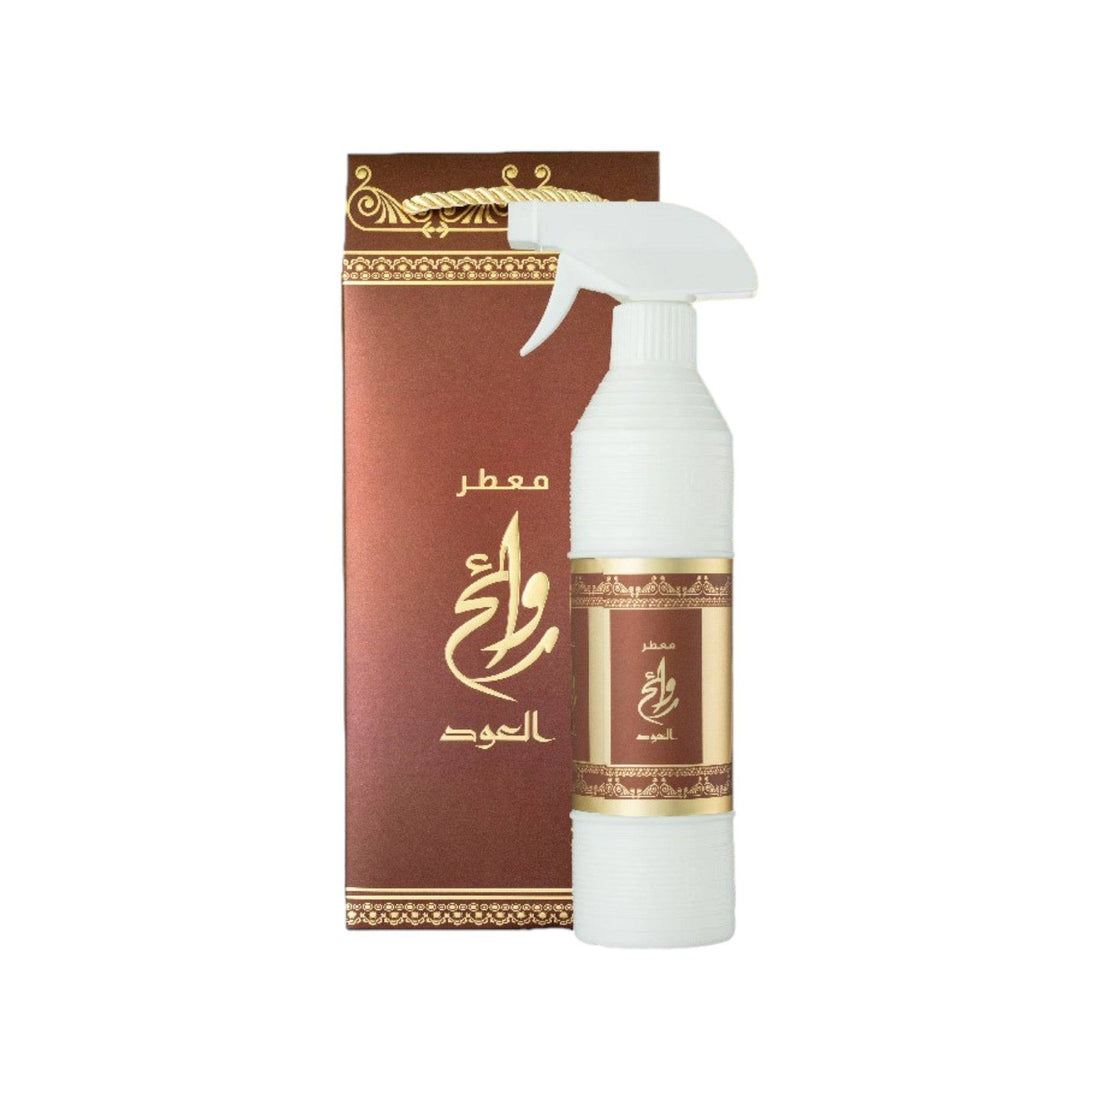 500ml Rawaieh Al Oud Air Freshener bottle from Oud Lover store, showcasing its luxurious Arabian oud scents.